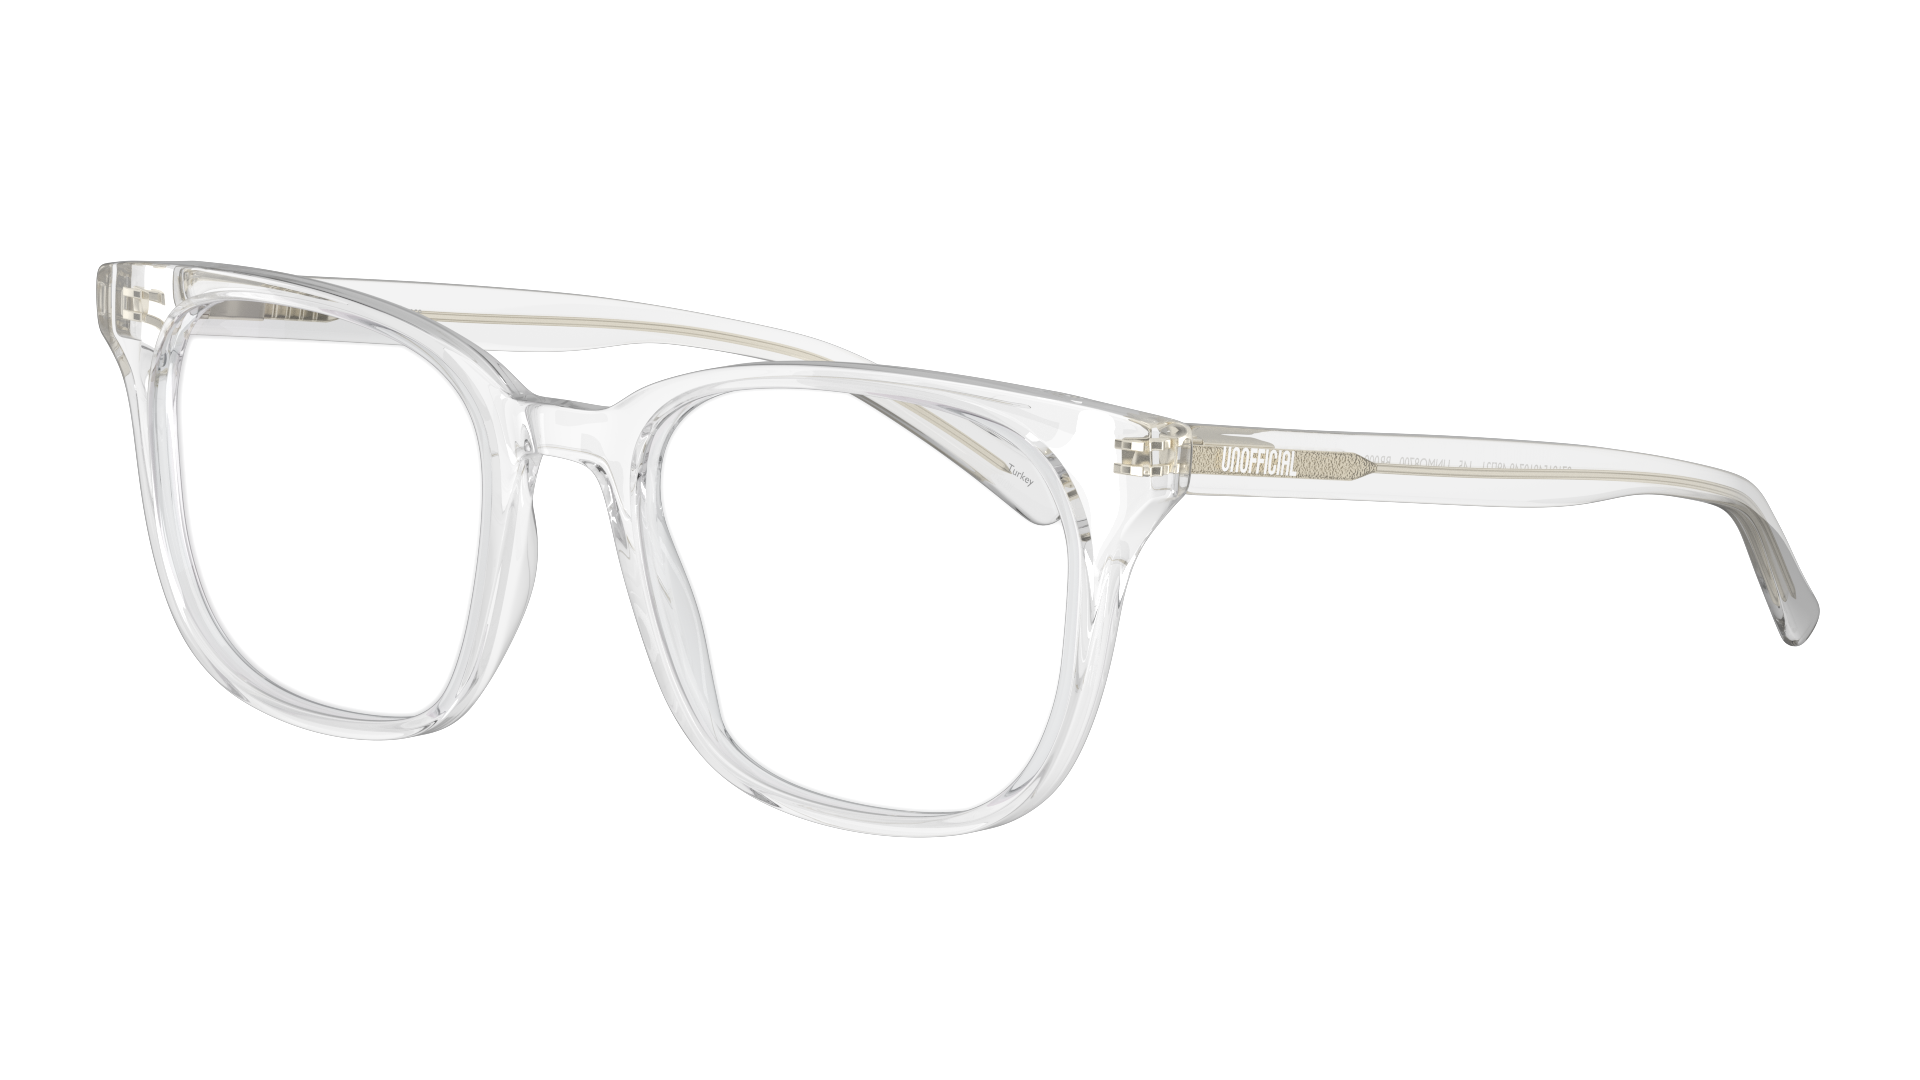 Angle_Left01 Unofficial UNOM0225 Glasses Transparent / Transparent, Clear